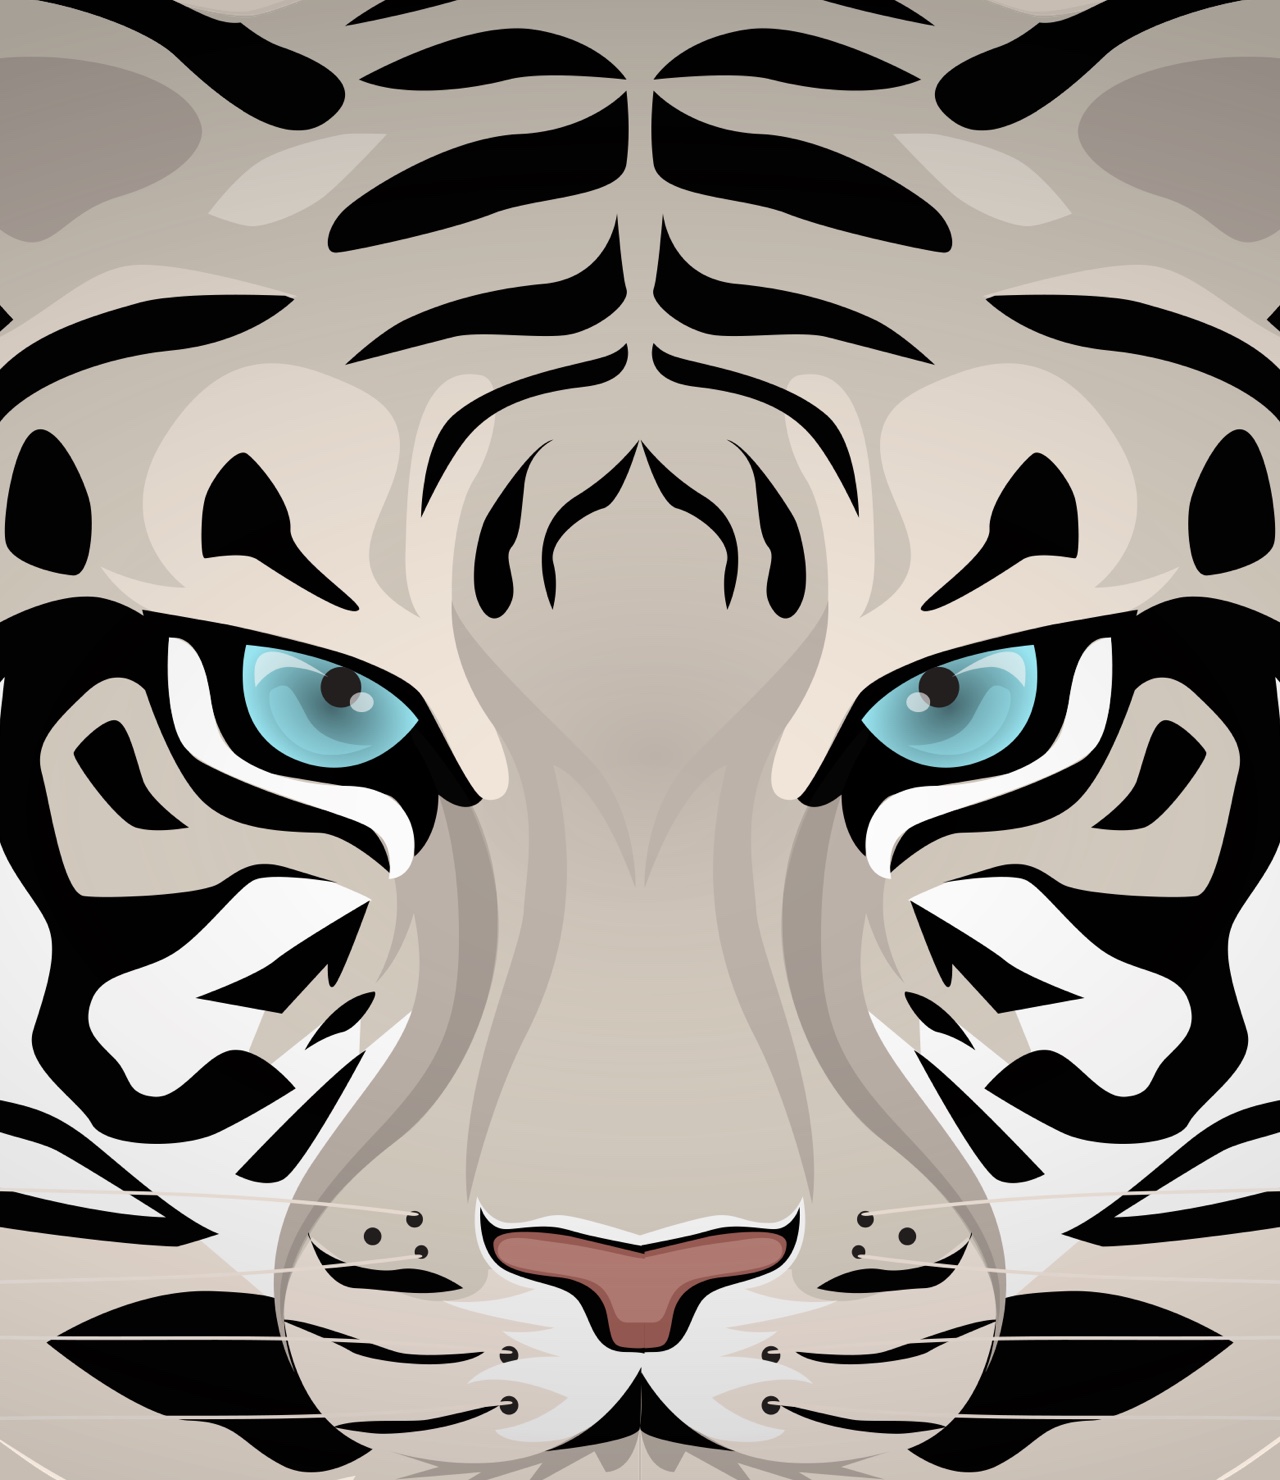 Stardoll white tiger illustration